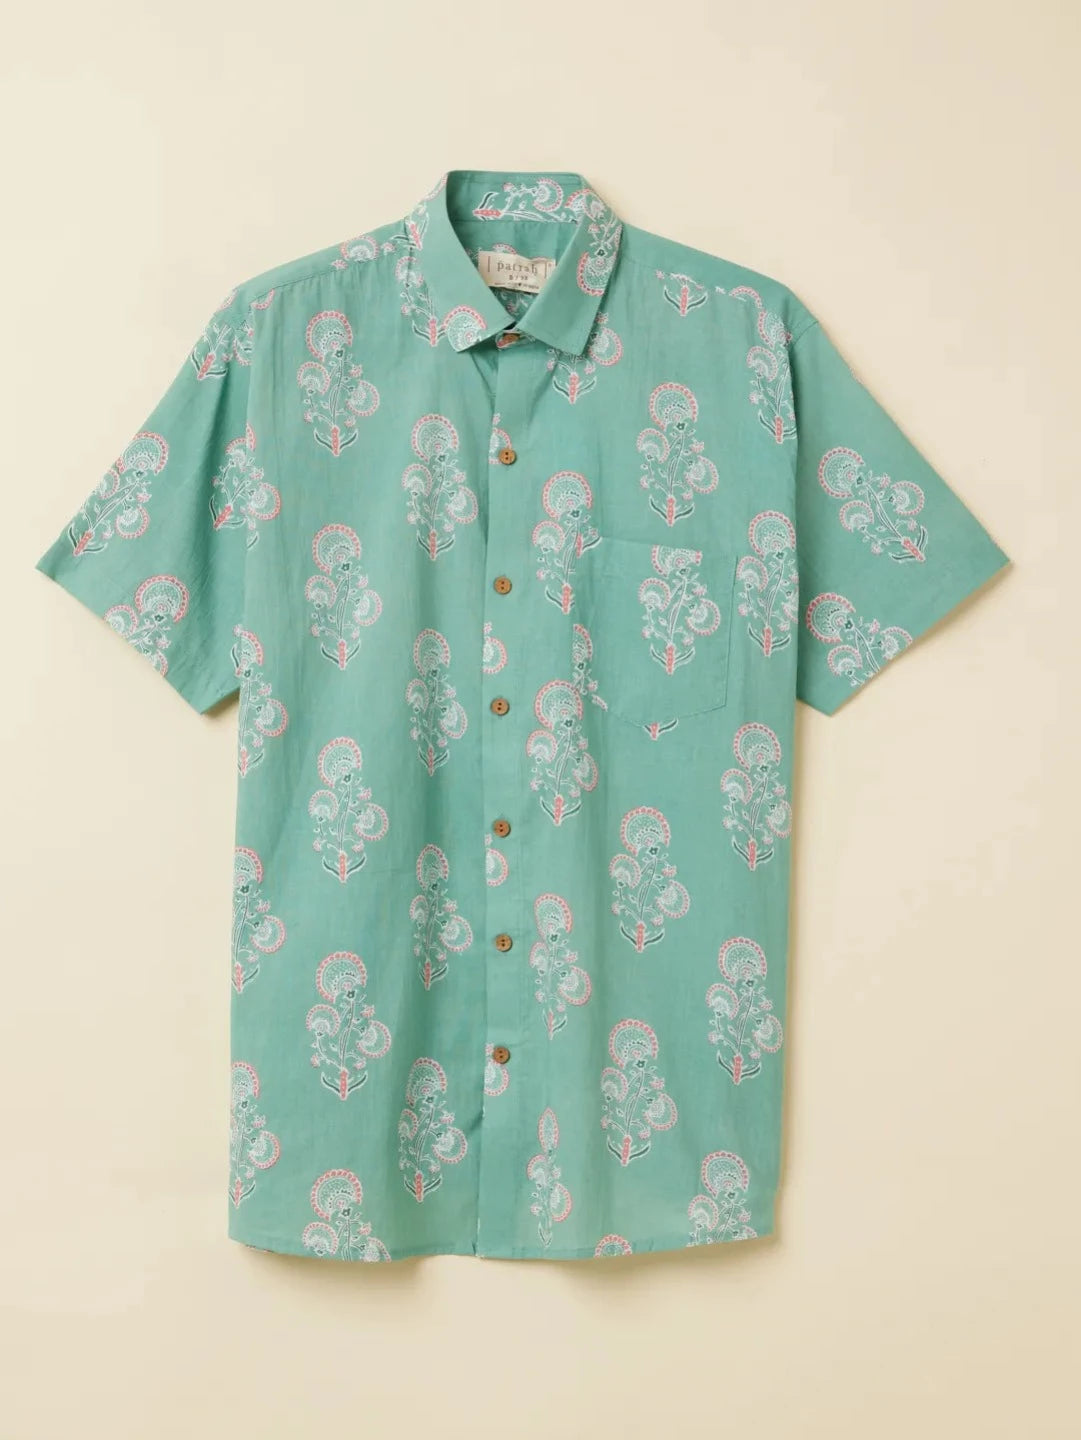 Teal Botanical Flower Printed Shirt